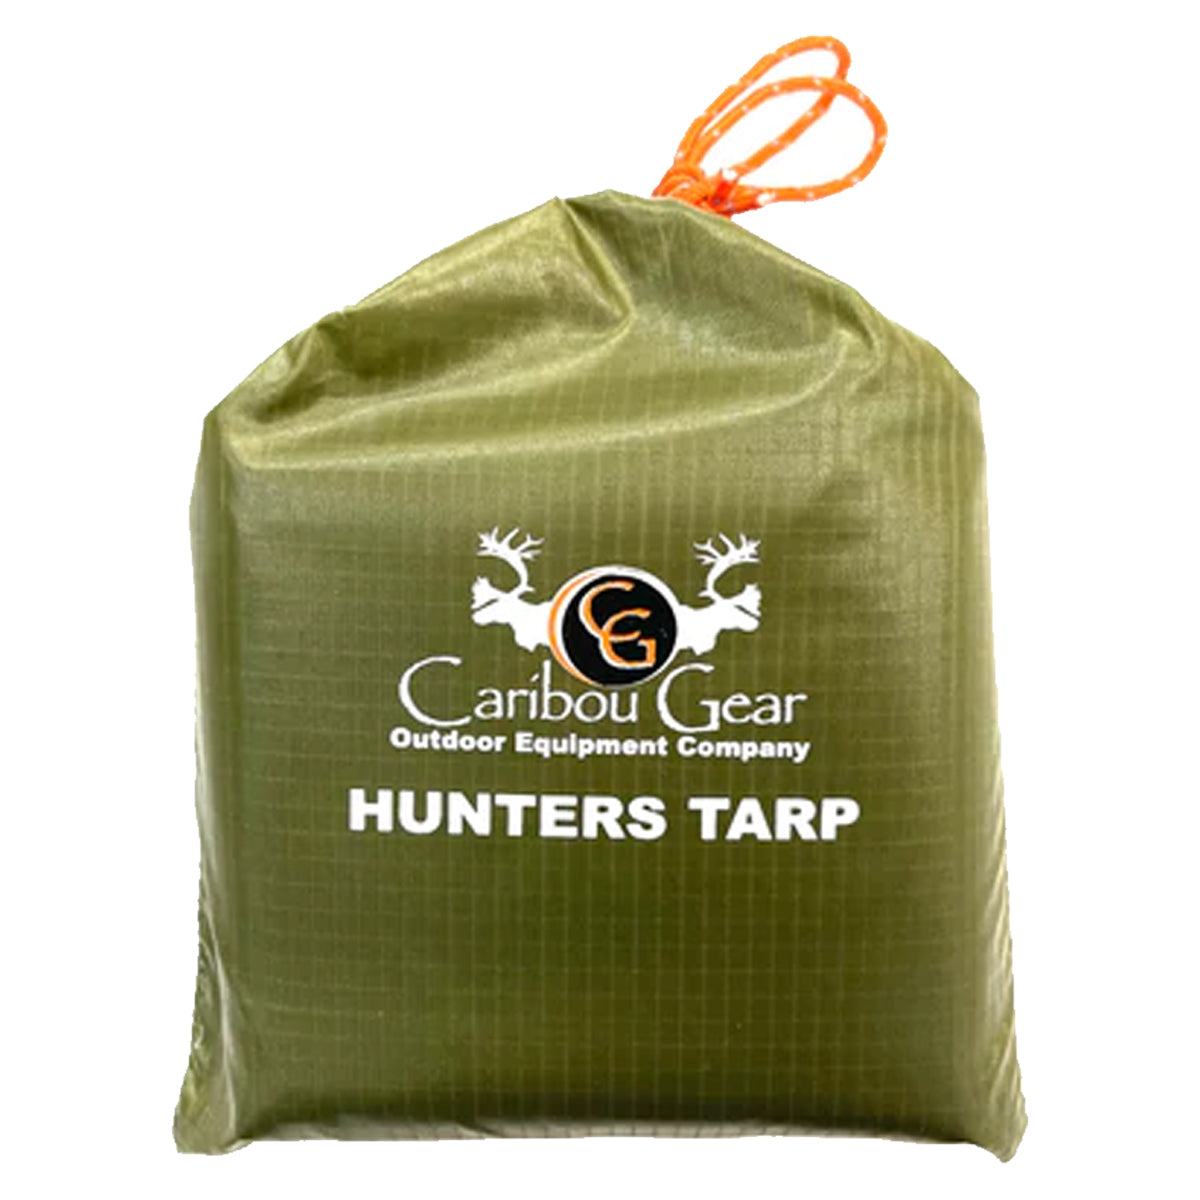 Caribou Gear Hunters Tarp in  by GOHUNT | Caribou Gear - GOHUNT Shop